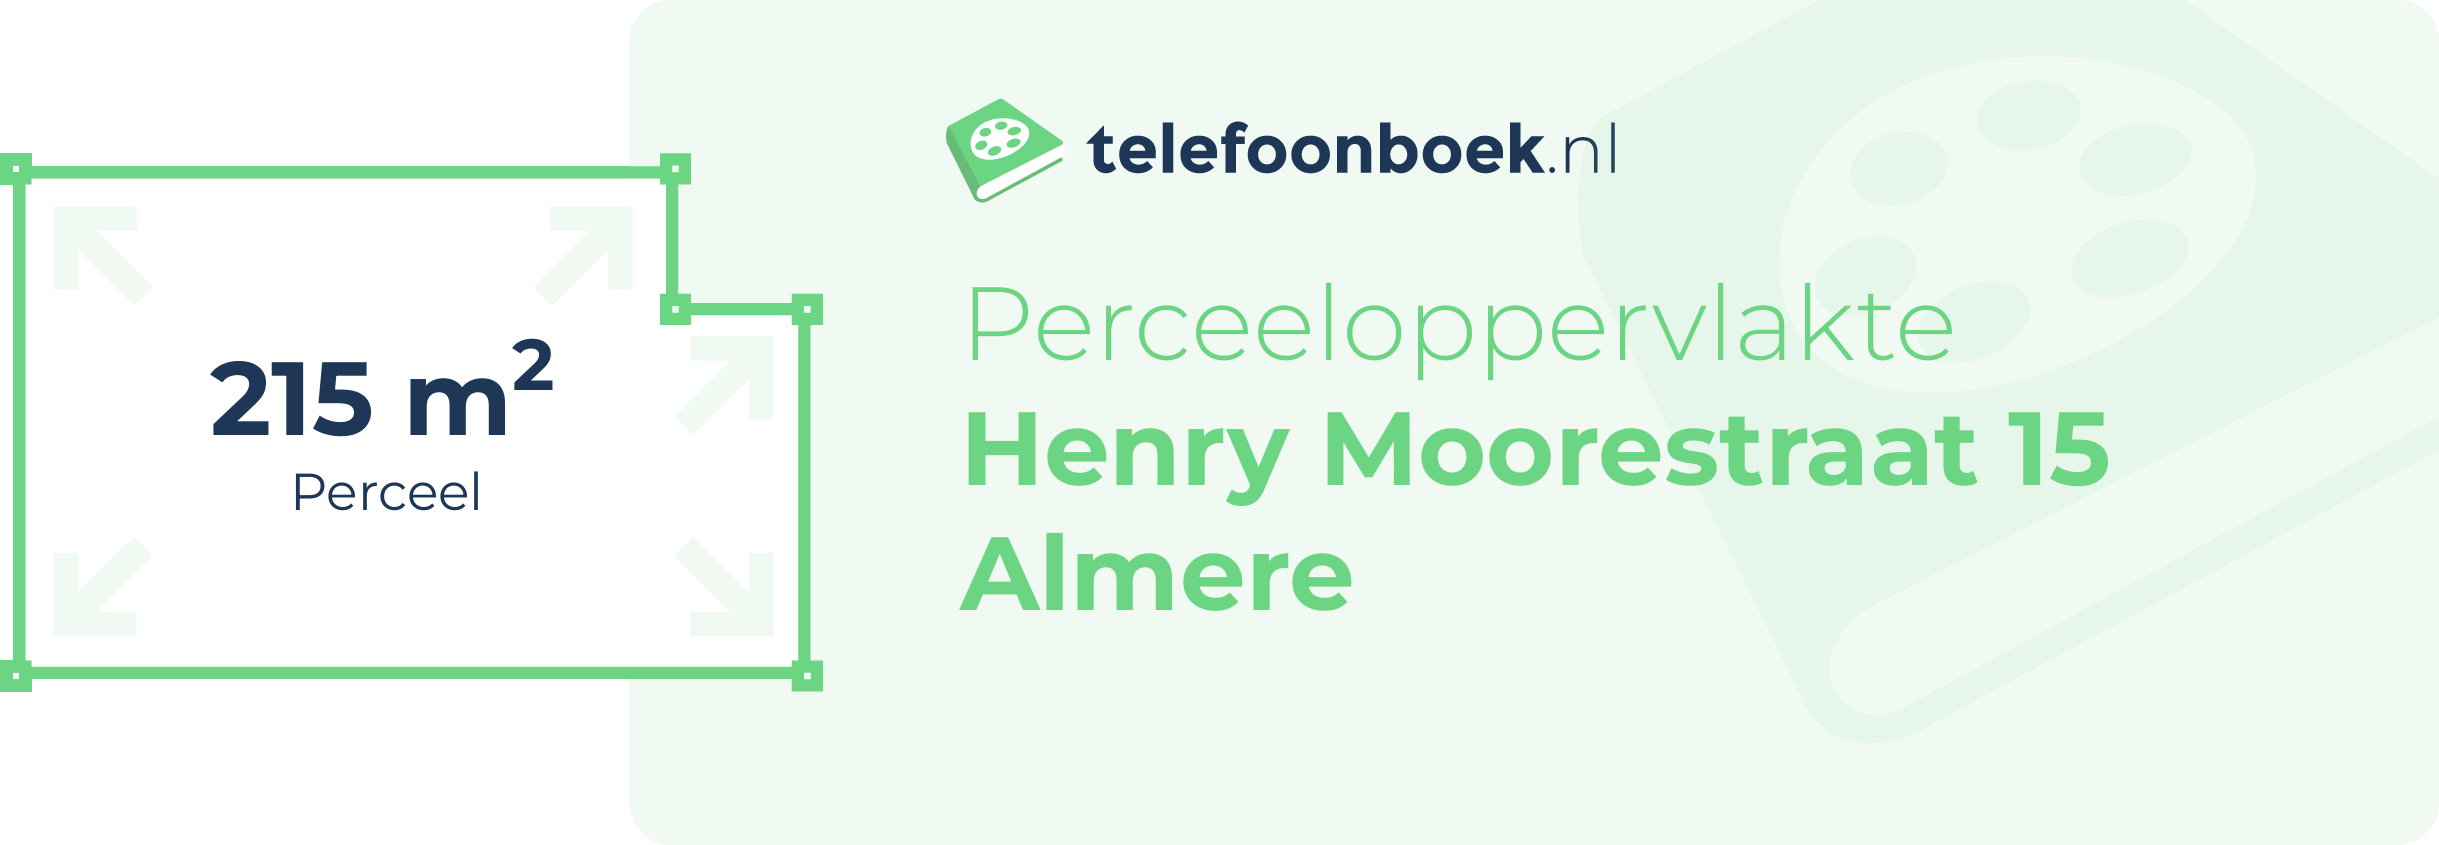 Perceeloppervlakte Henry Moorestraat 15 Almere